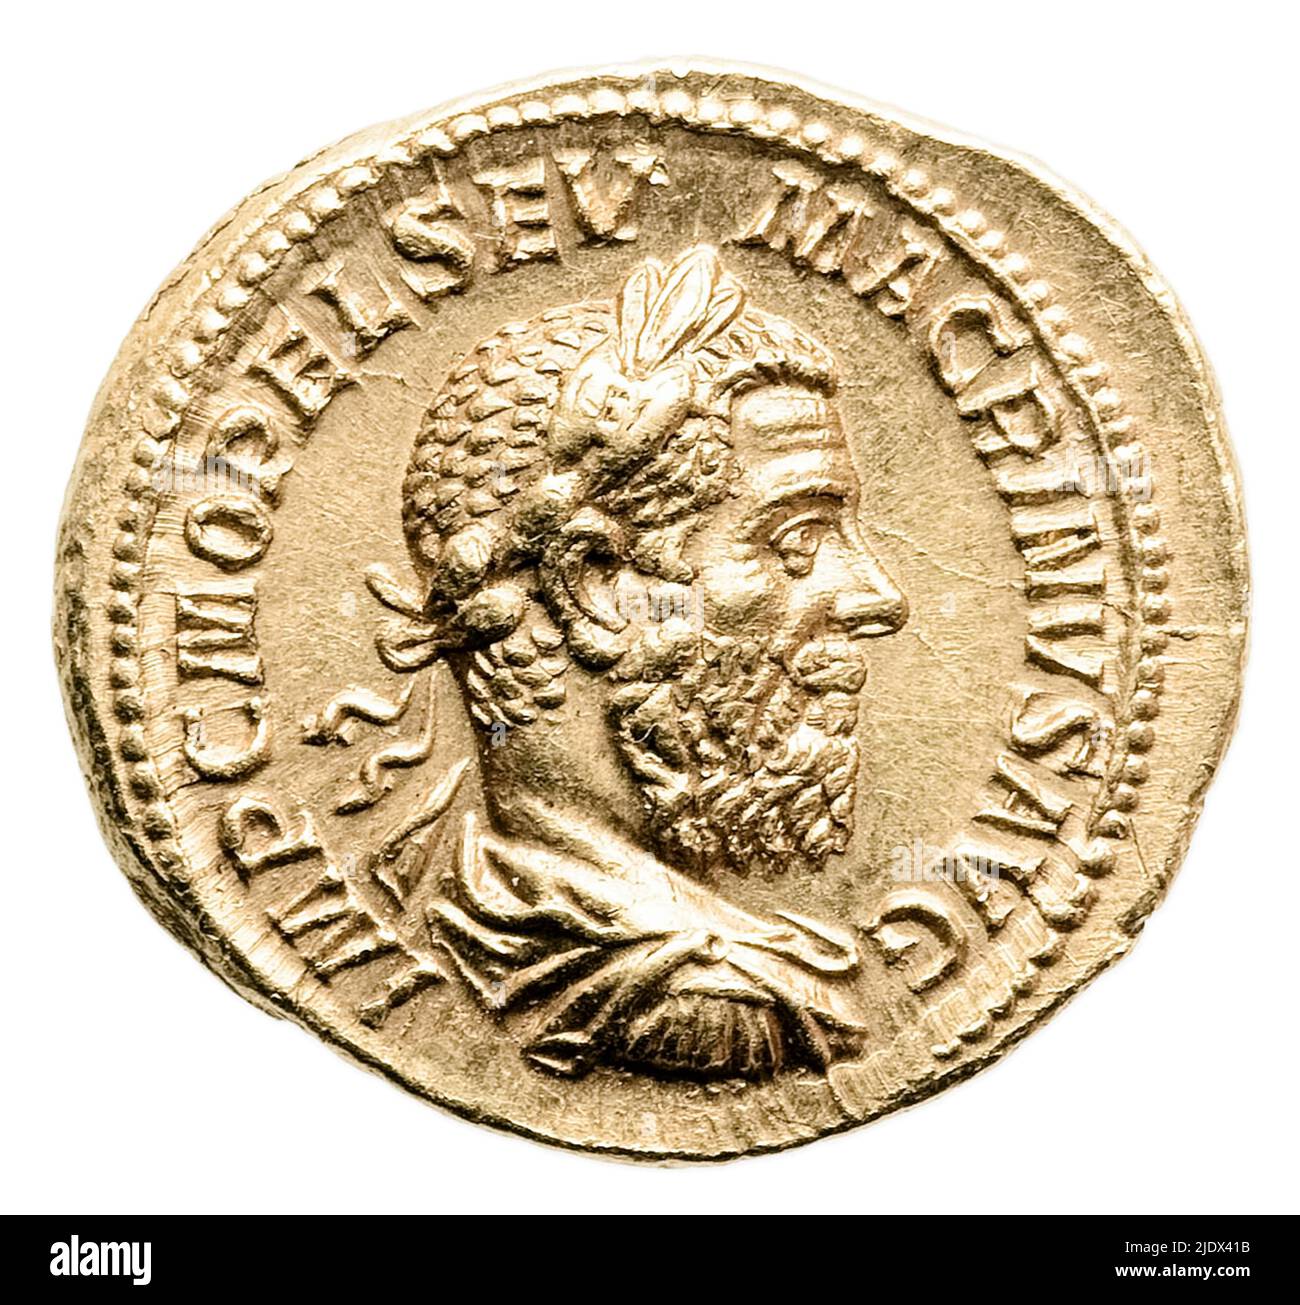 Moneda romana de oro que data de 217AD mostrando la cabeza del emperador romano Marcus Opellius Macrinus (165-218). Foto de stock